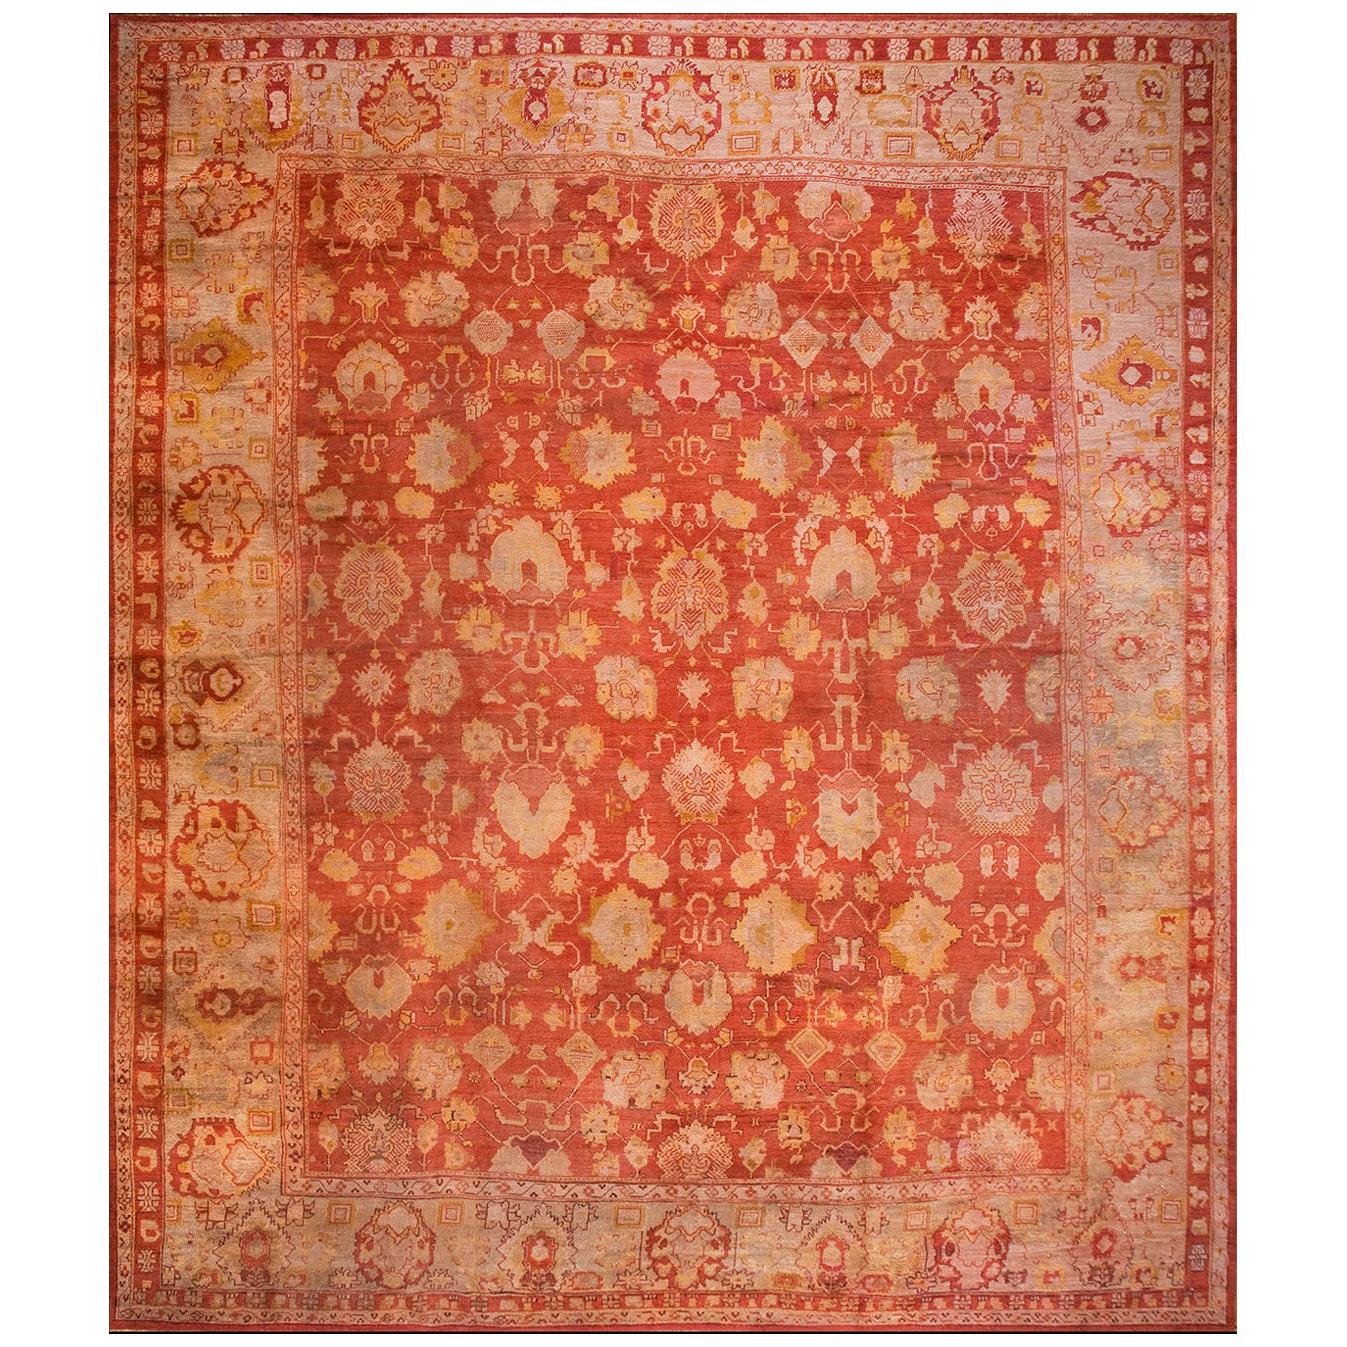 19th Century Turkish Oushak Carpet ( 14'10" x 17'6" - 452 x 533 ) For Sale